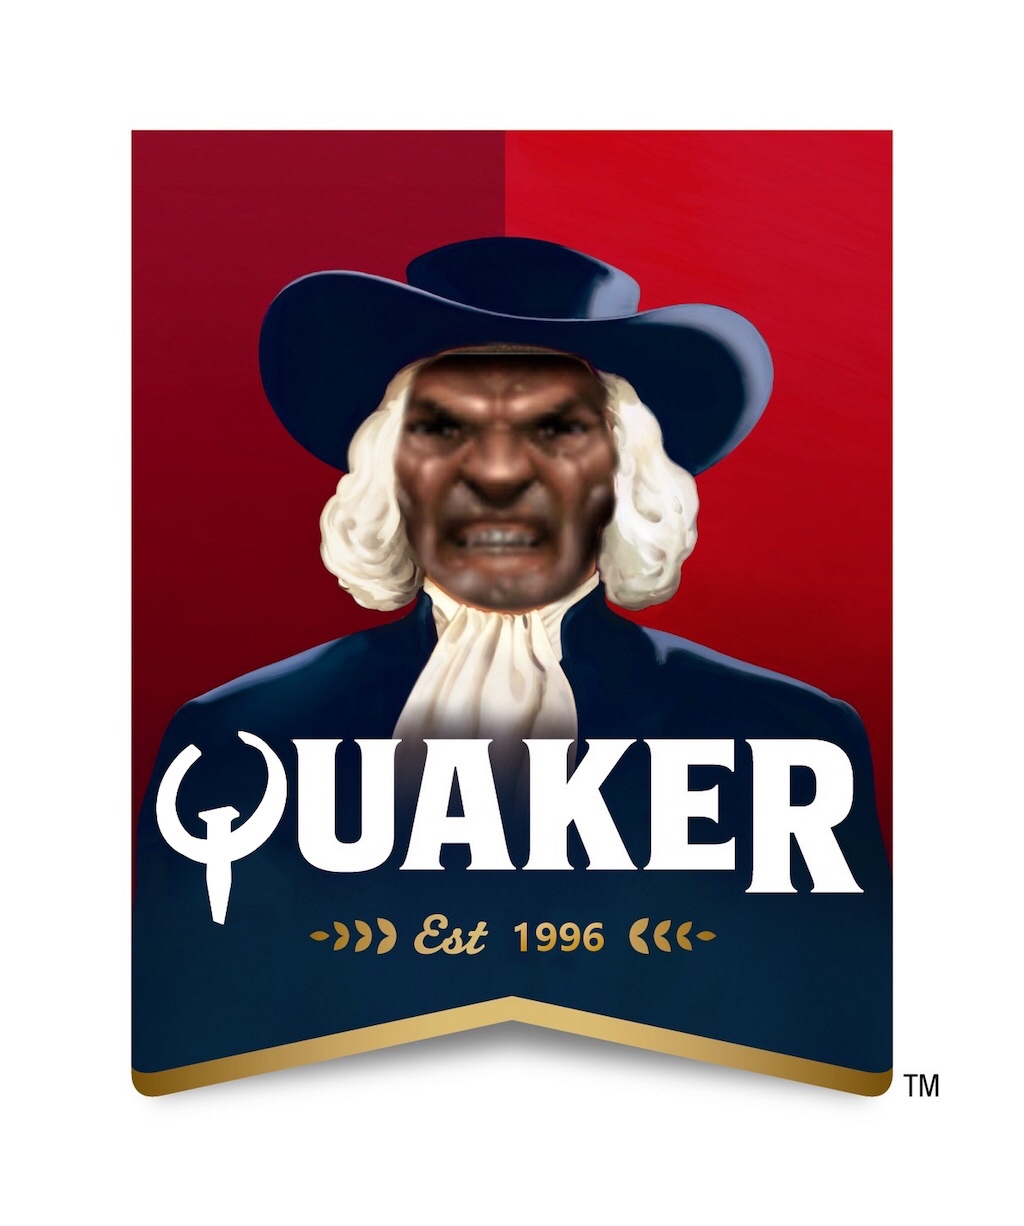 memes - quaker oats company